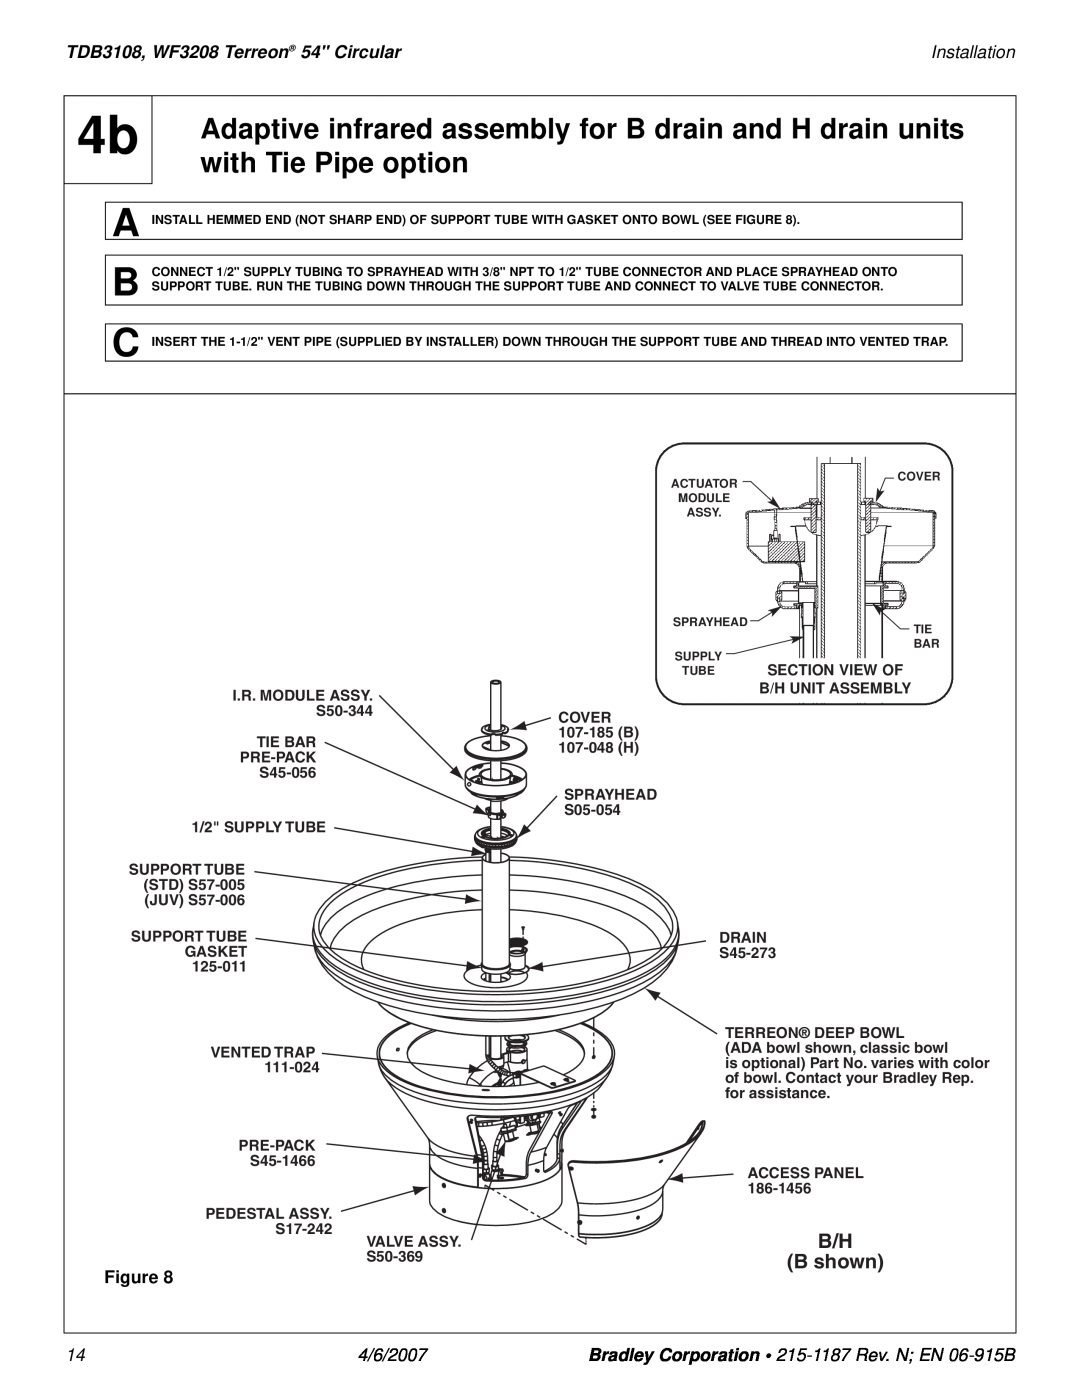 Bradley Smoker installation manual B/H B shown, TDB3108, WF3208 Terreon 54 Circular, Installation, 4/6/2007 